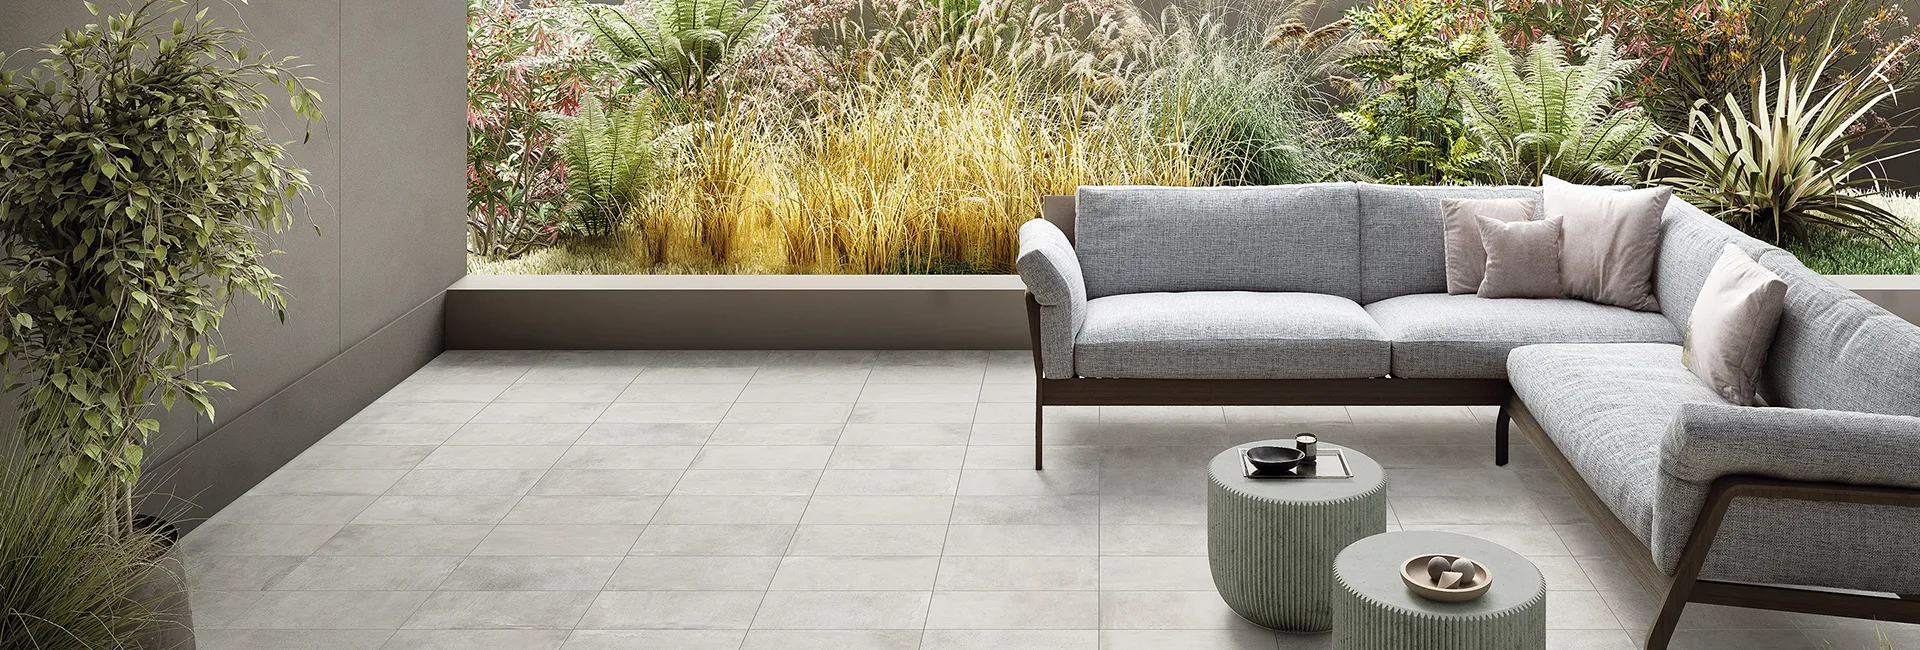 Пол из керамогранита эффекта цемента Street цвета Milano Silver на террасе с диваном и садом.